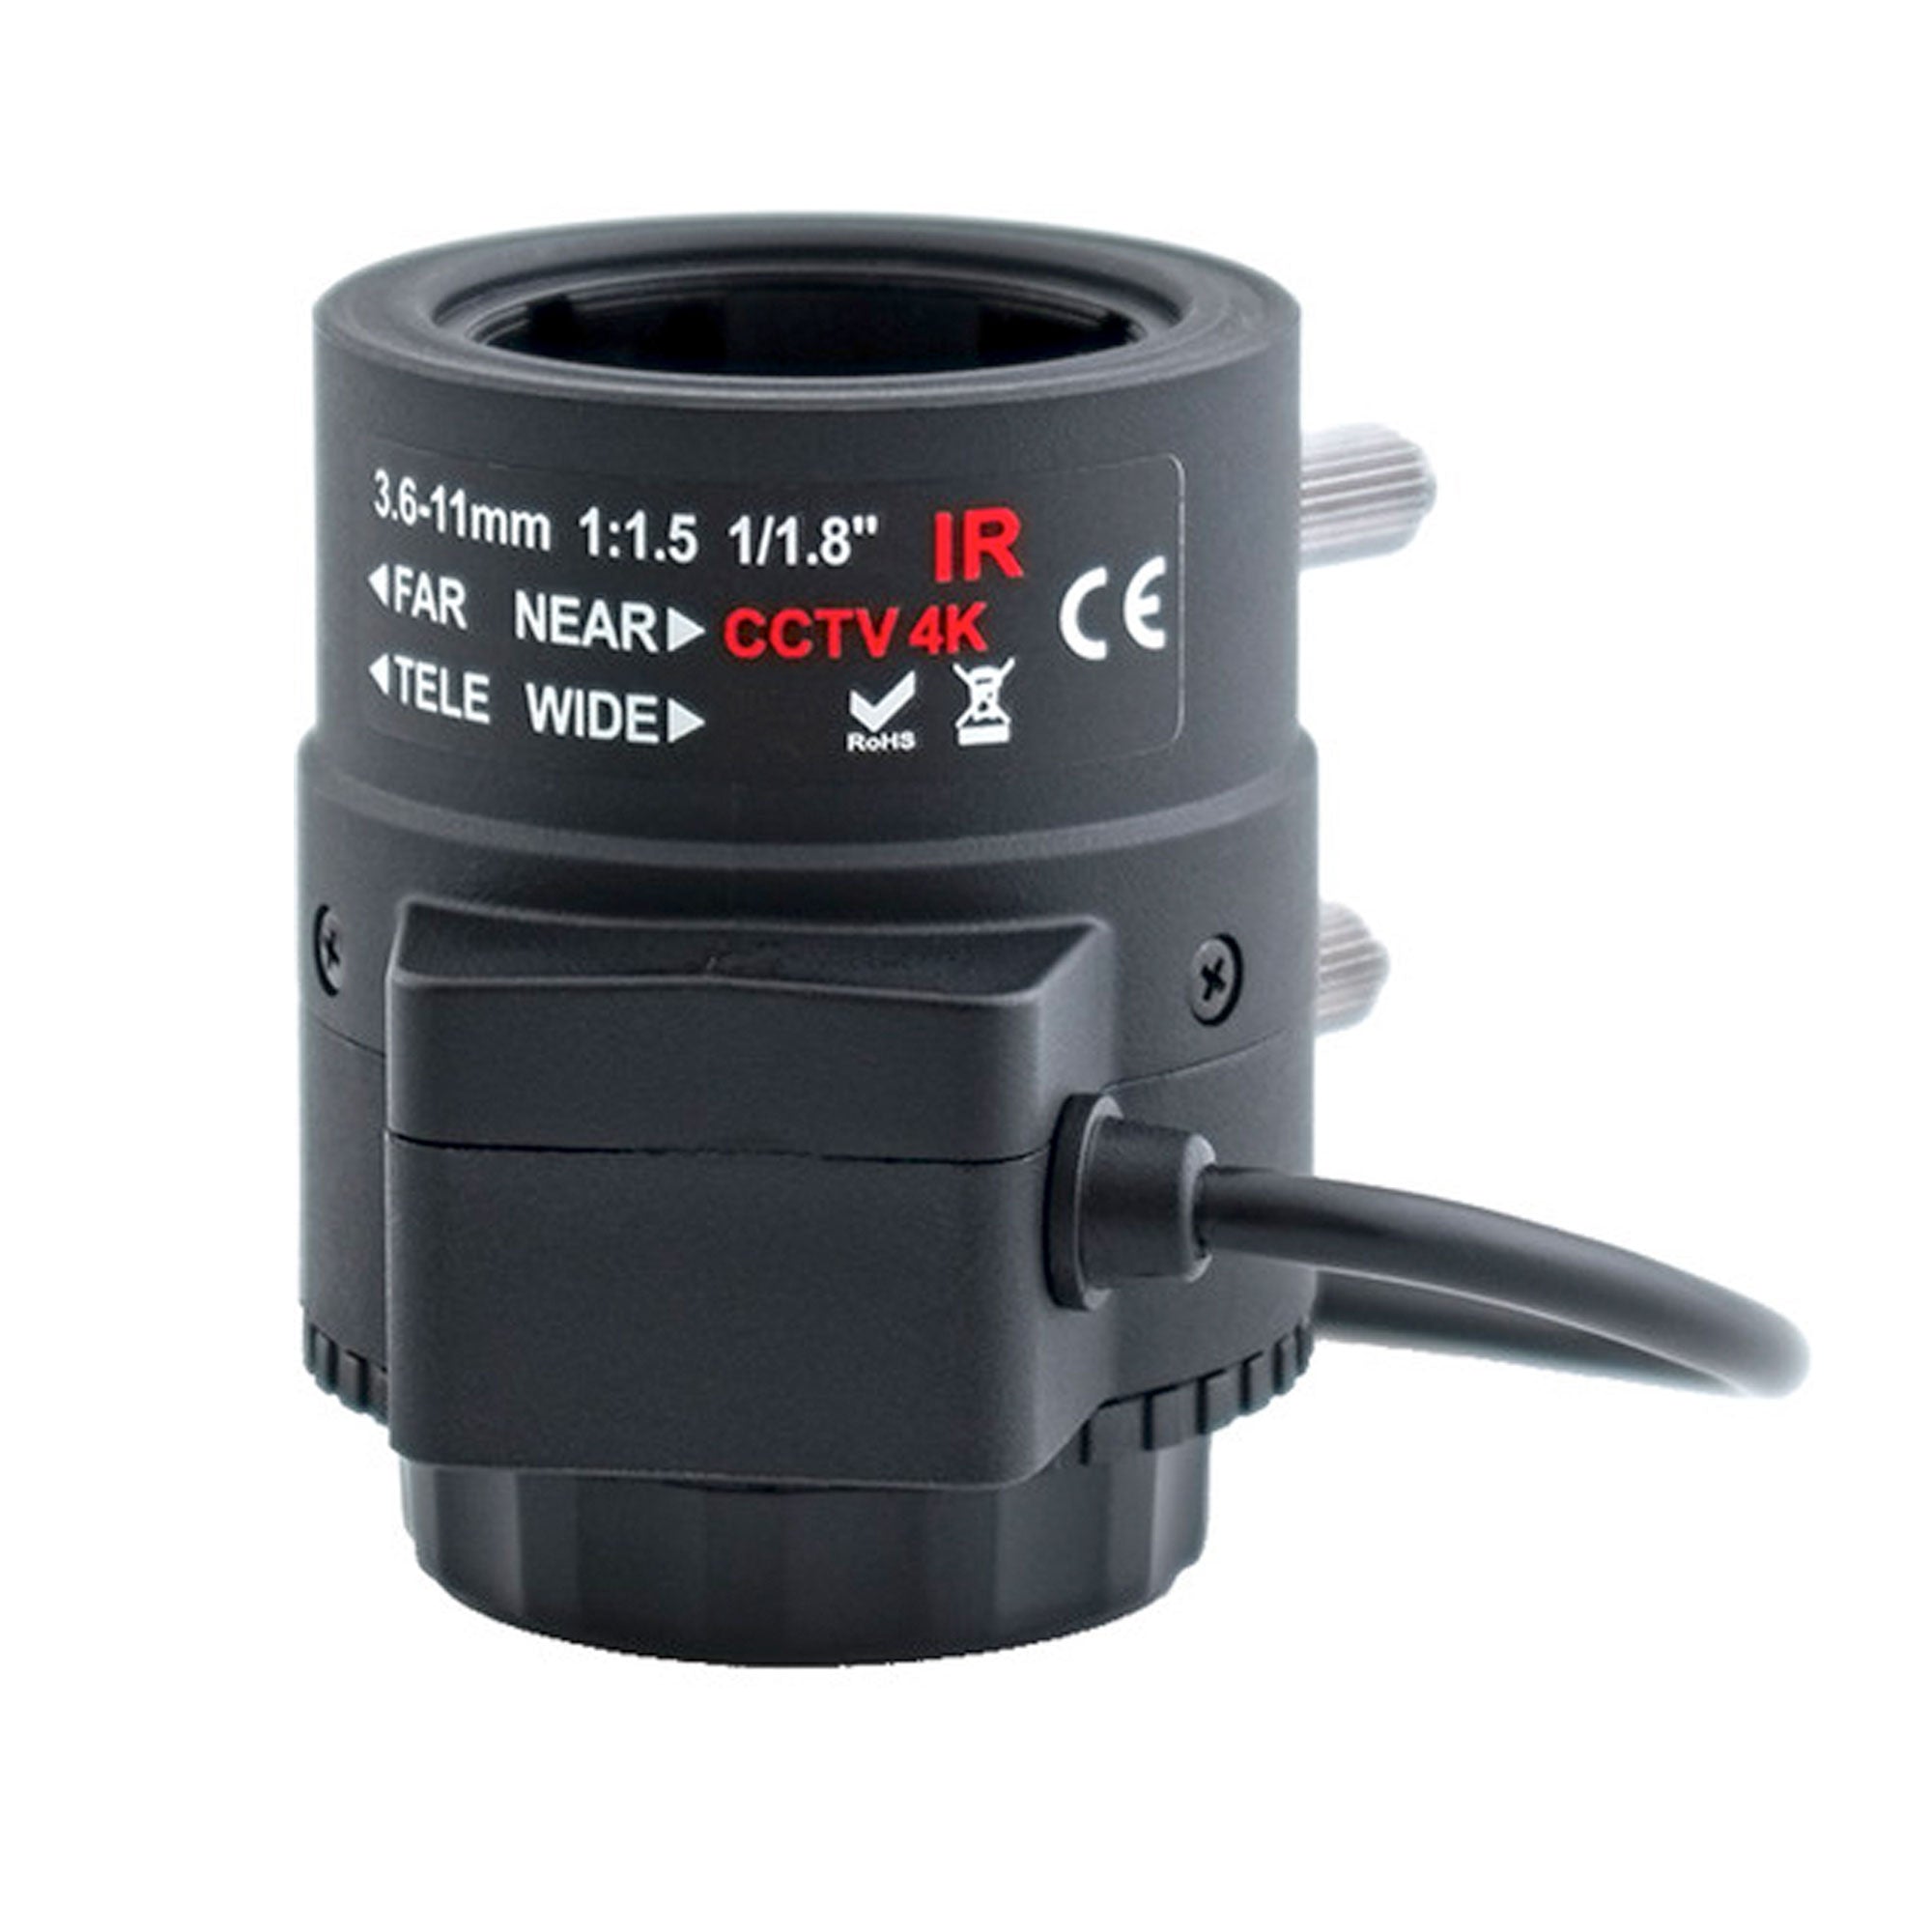 AIDA Imaging 3.6-11mm f/1.6 Varifocal 4K Lens (CS-Mount)